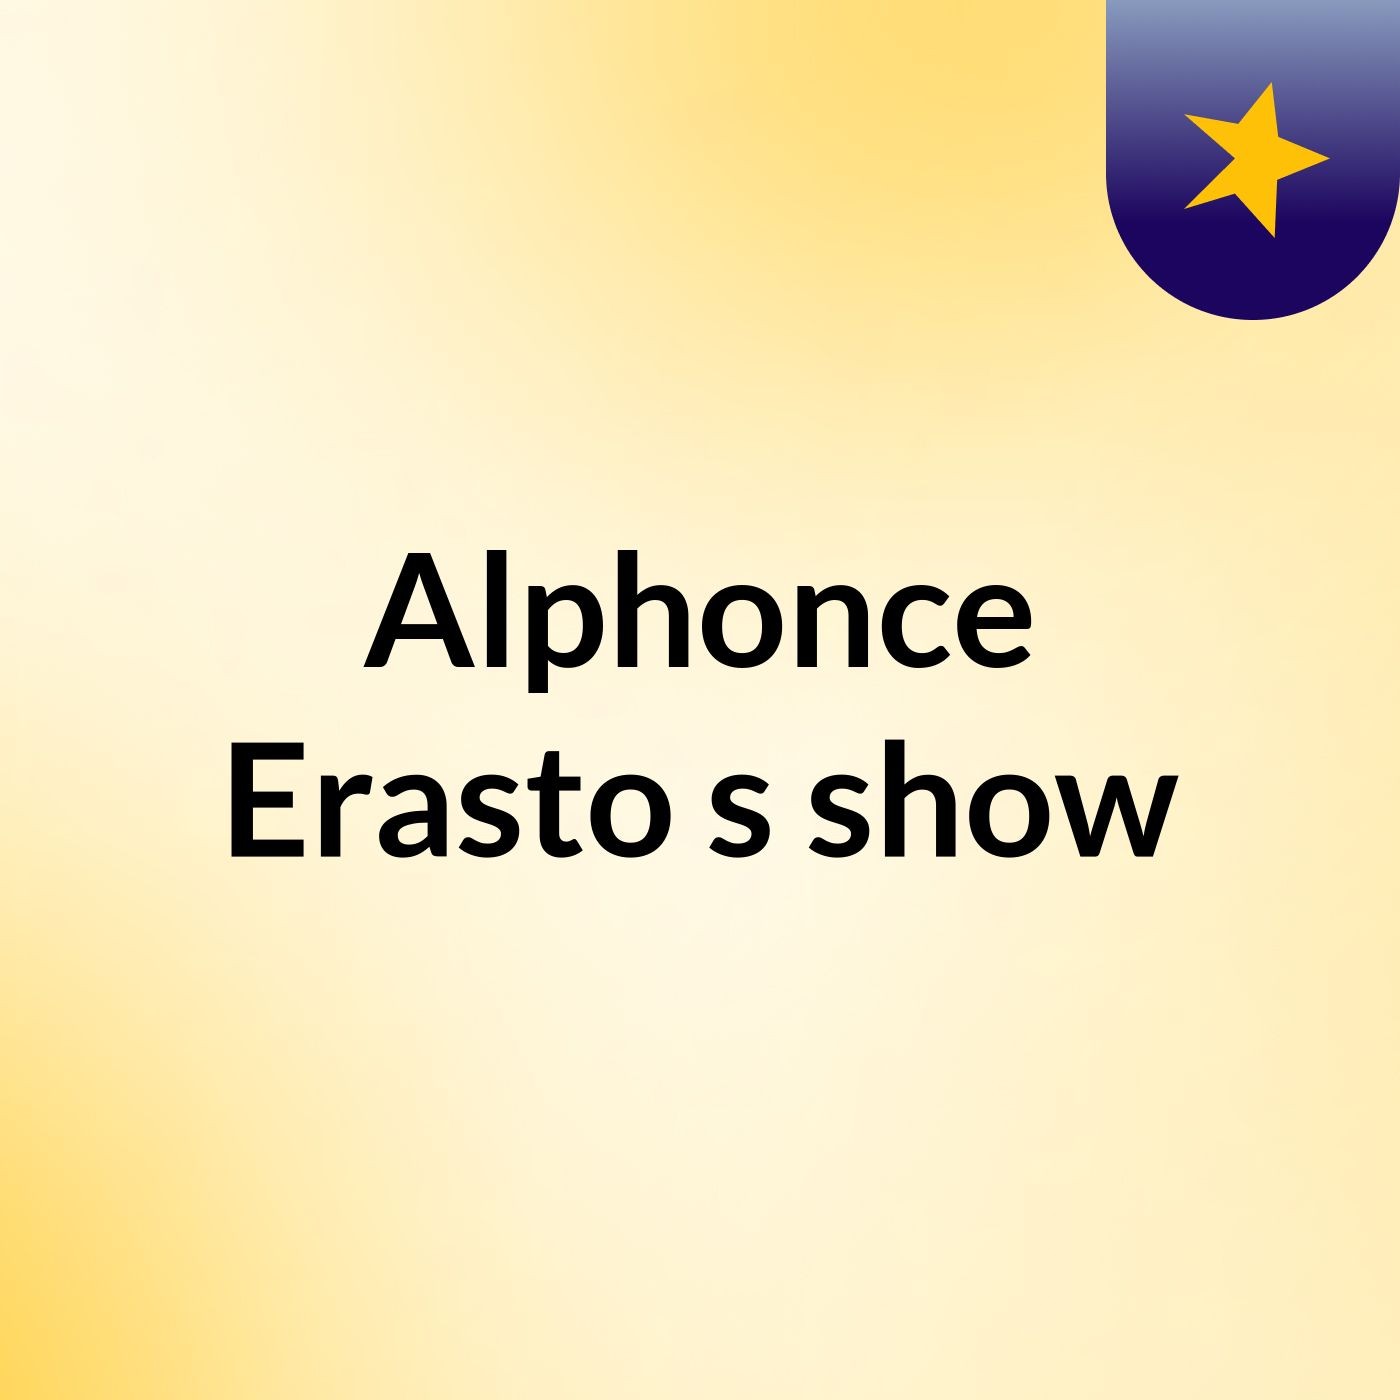 Alphonce Erasto's show